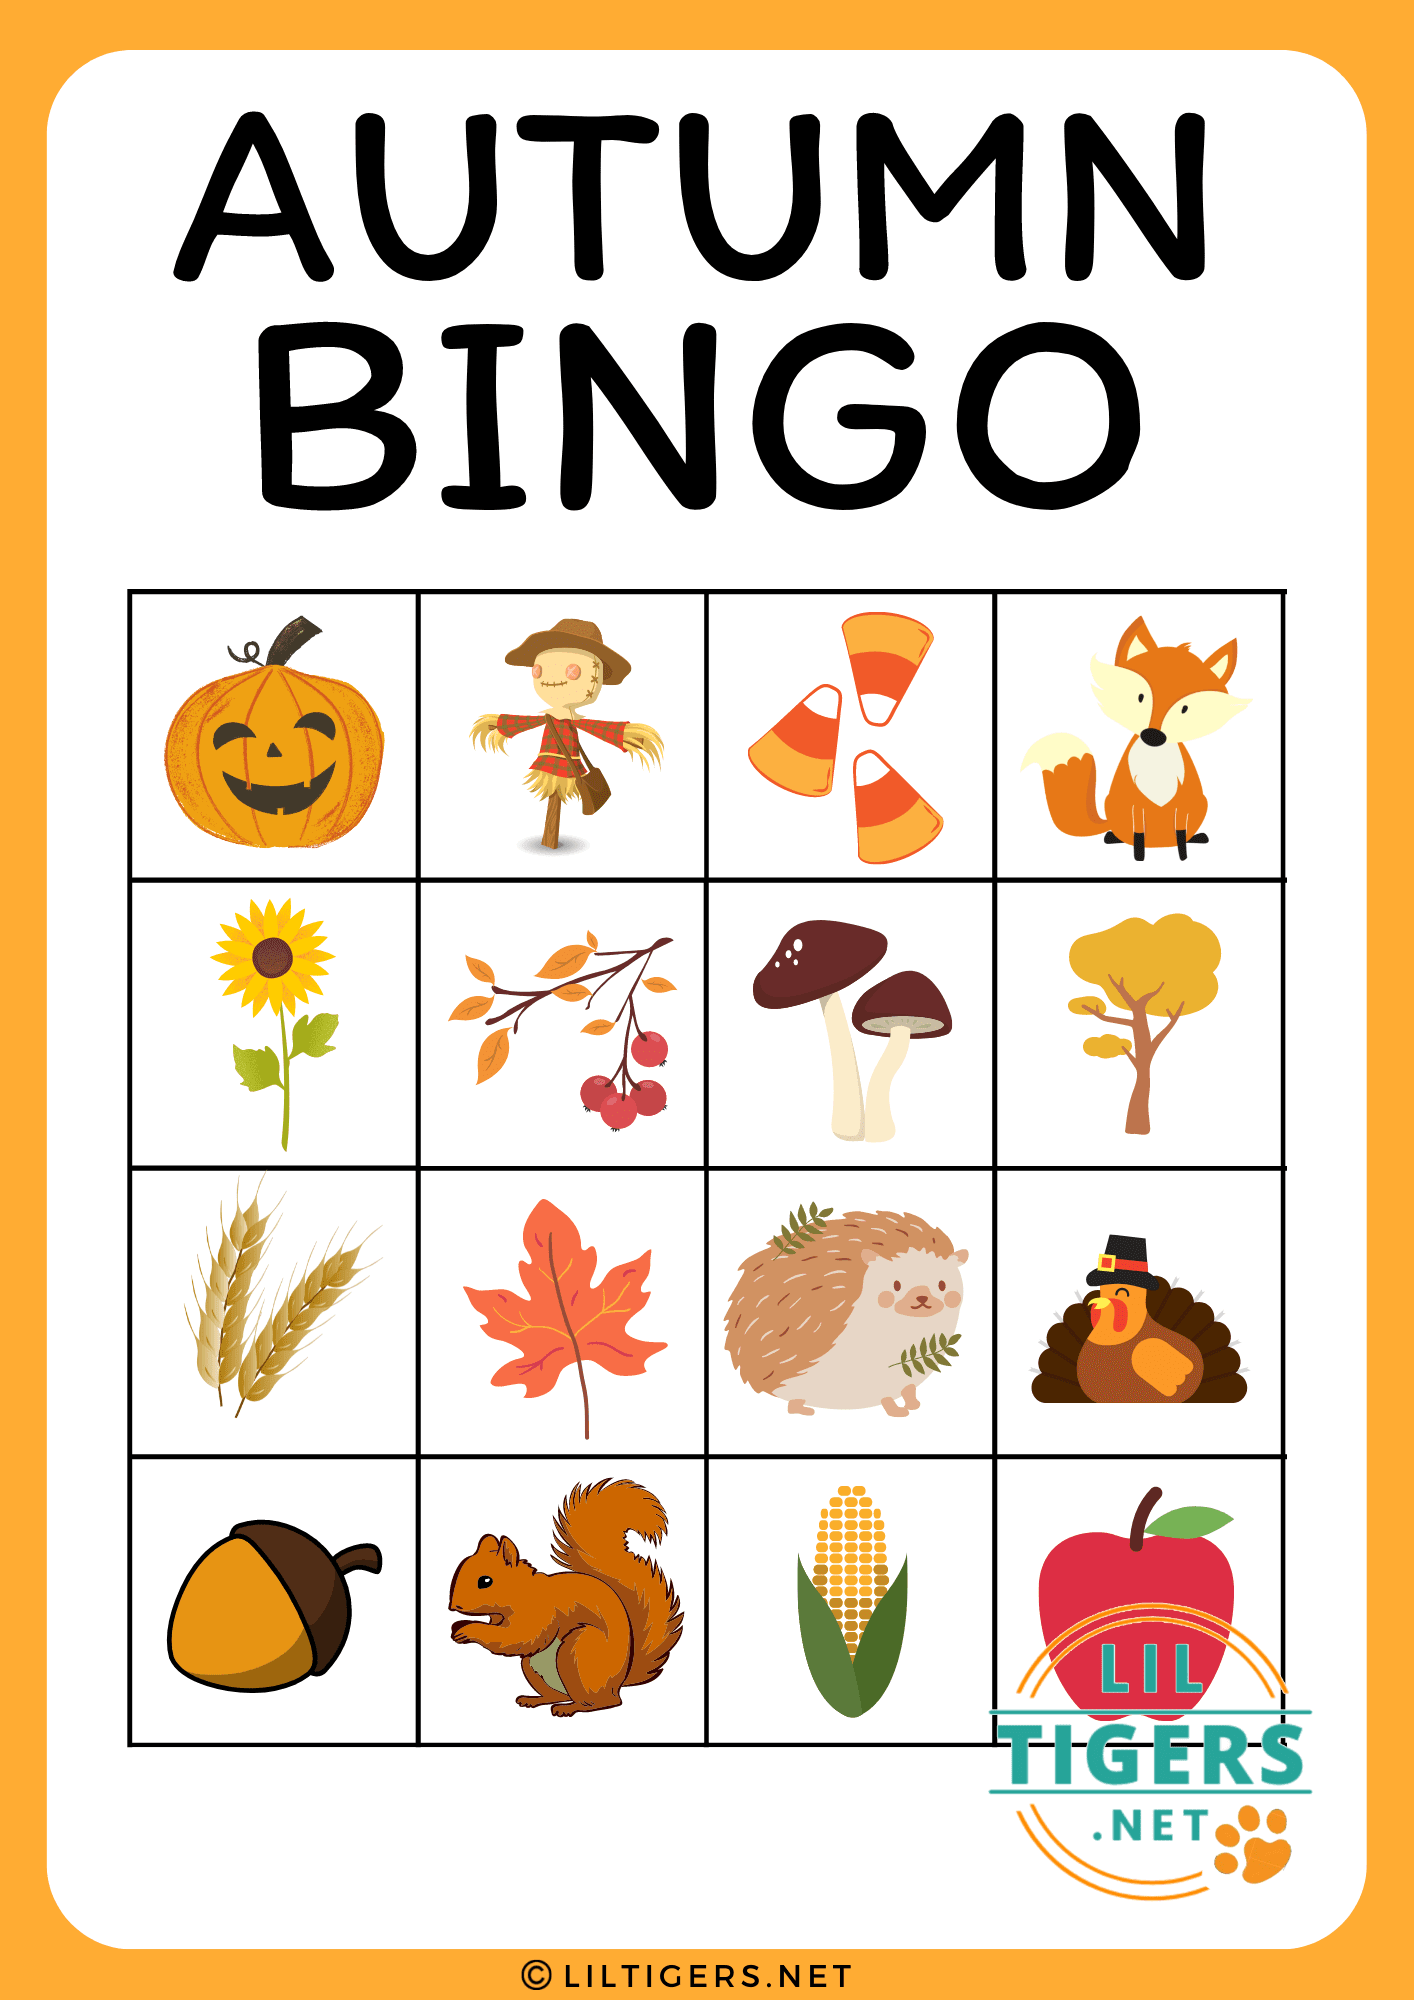 free printable fall bingo game